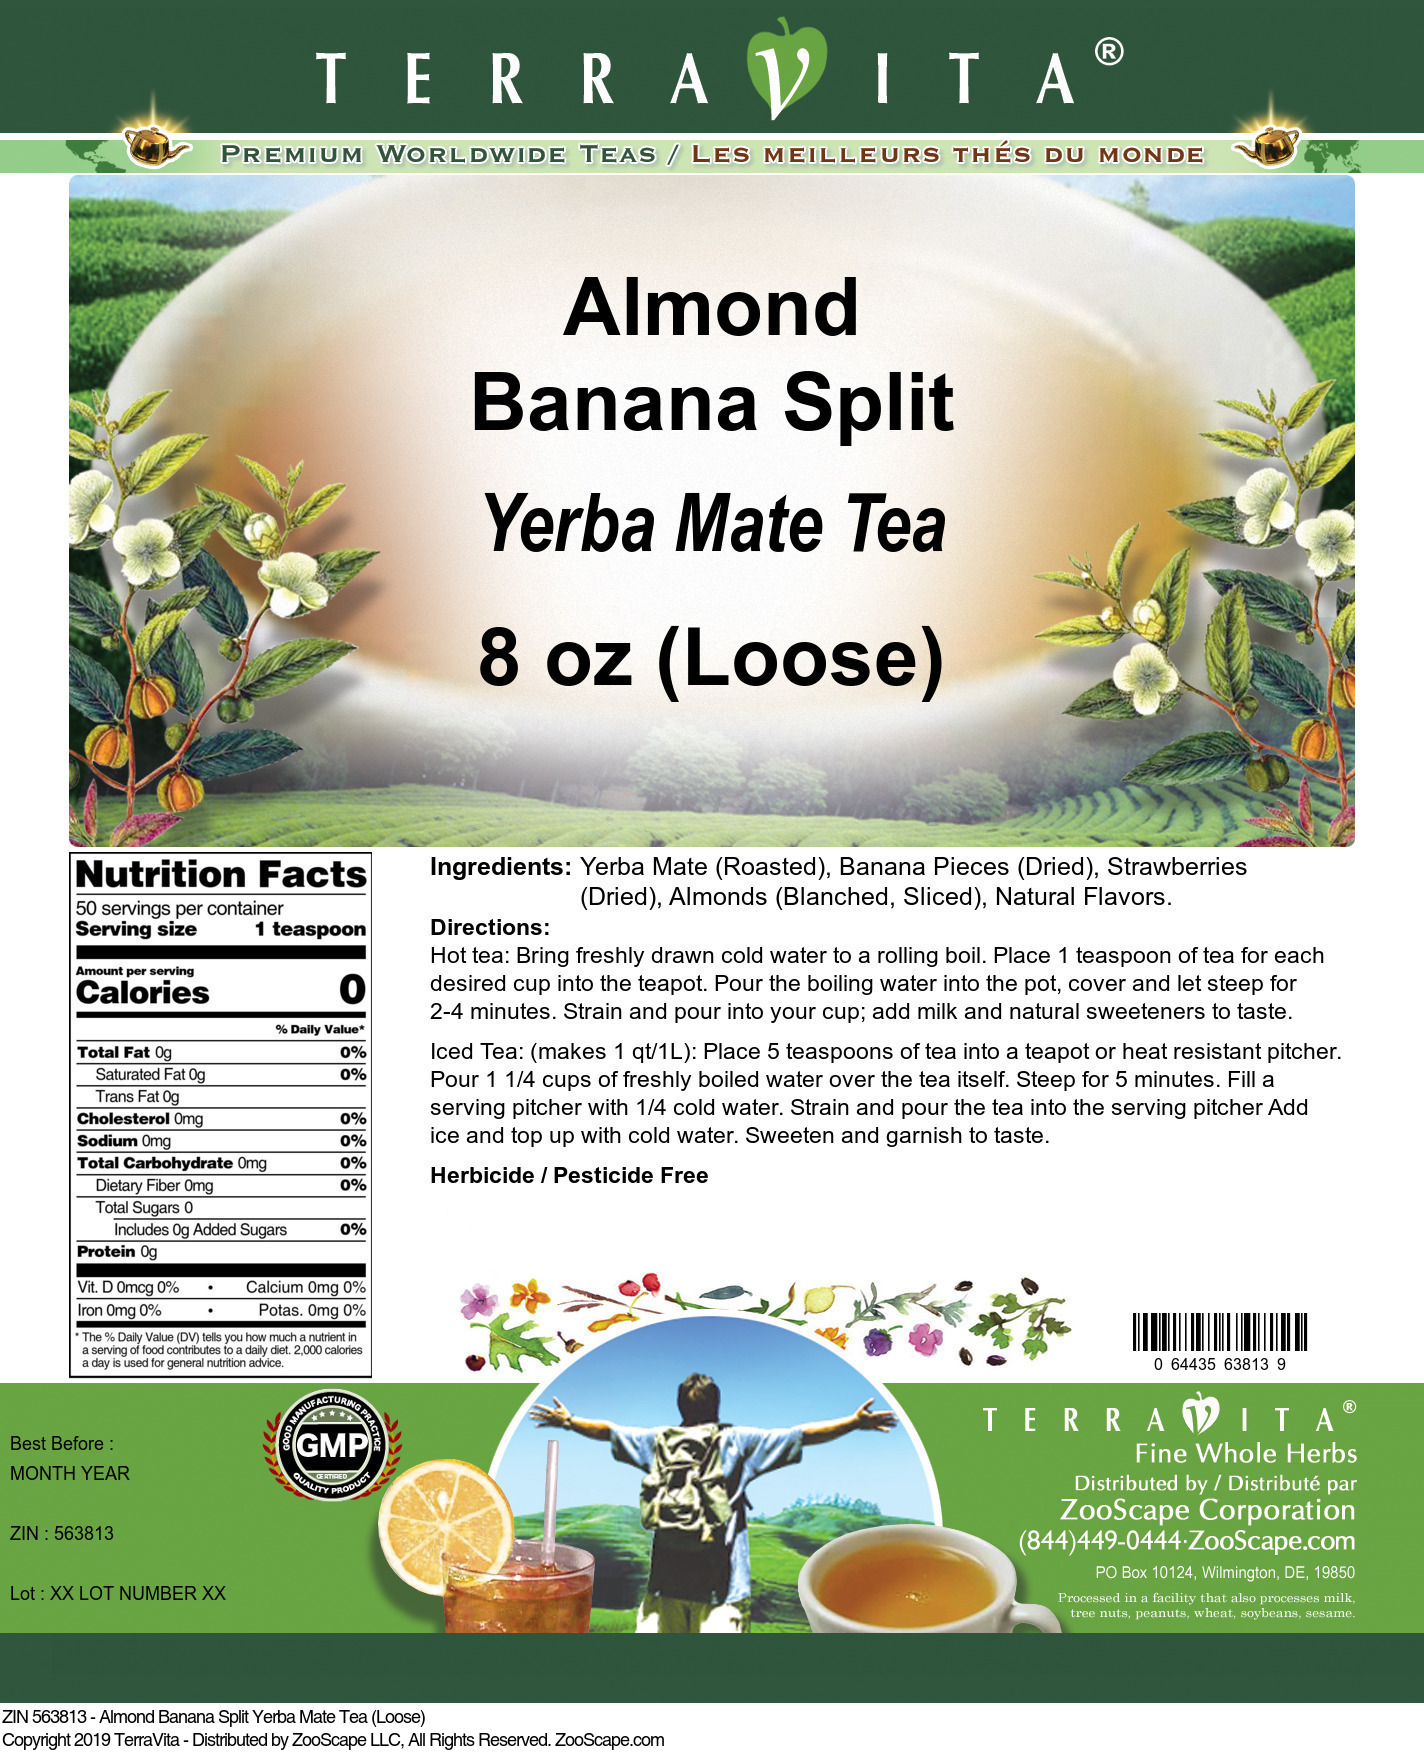 Almond Banana Split Yerba Mate Tea (Loose) - Label